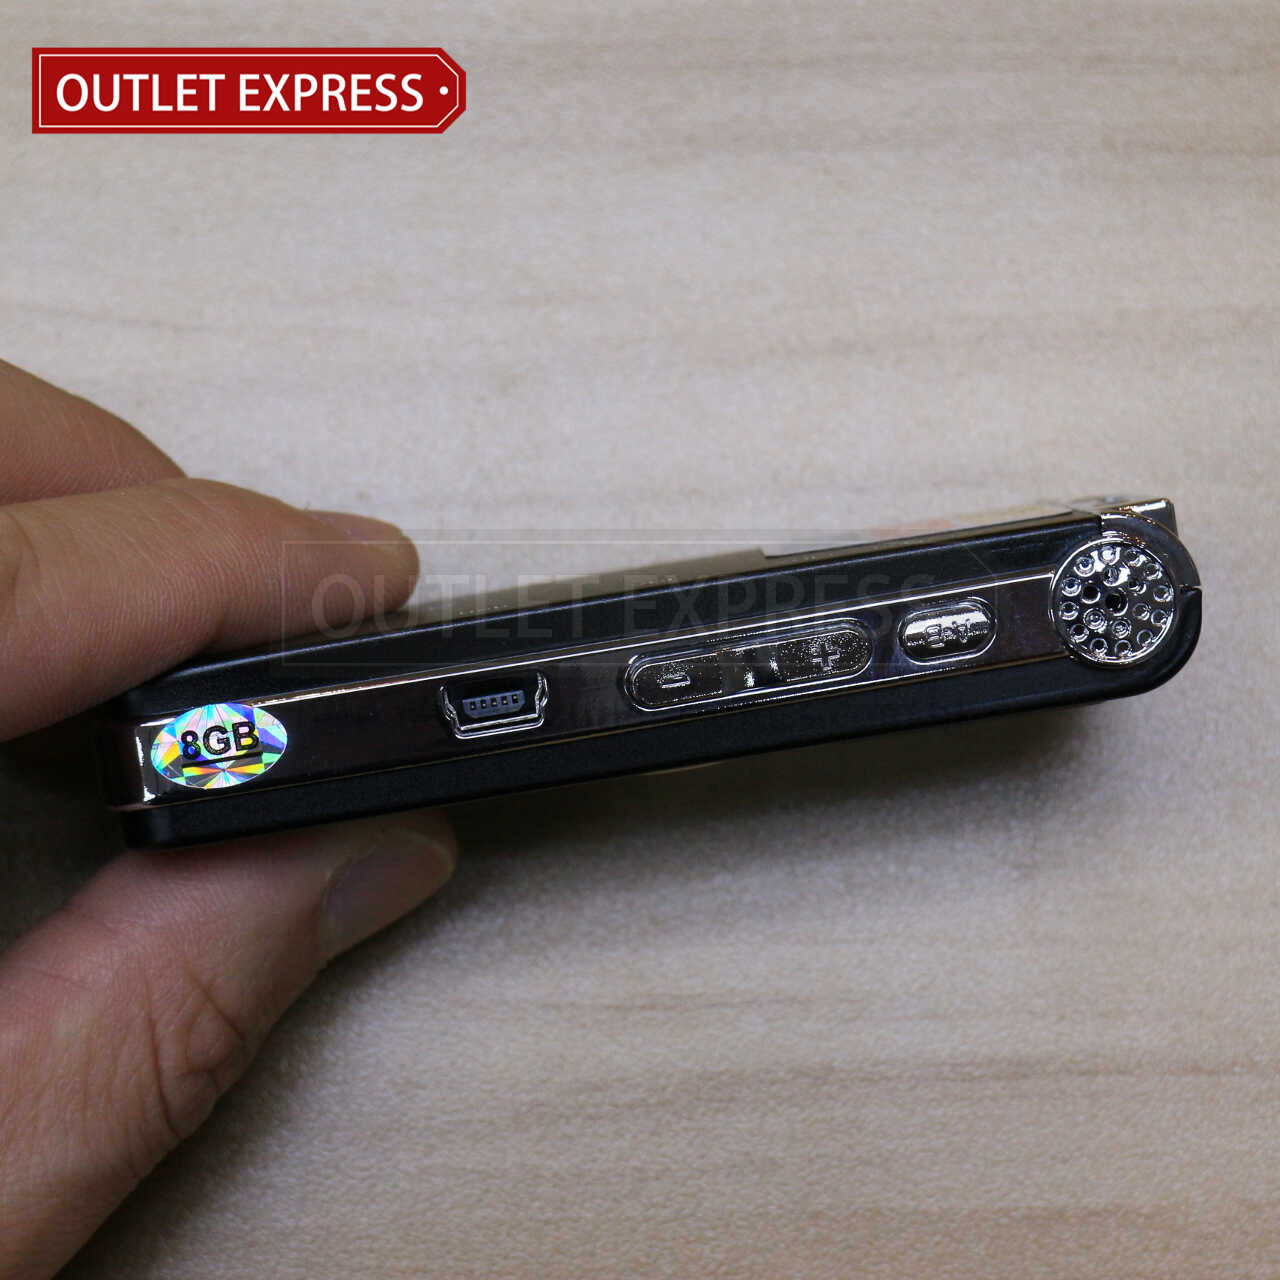 8GB USB高清數碼錄音筆 | MP3播放器- Outlet Express HK生活百貨城實拍相片